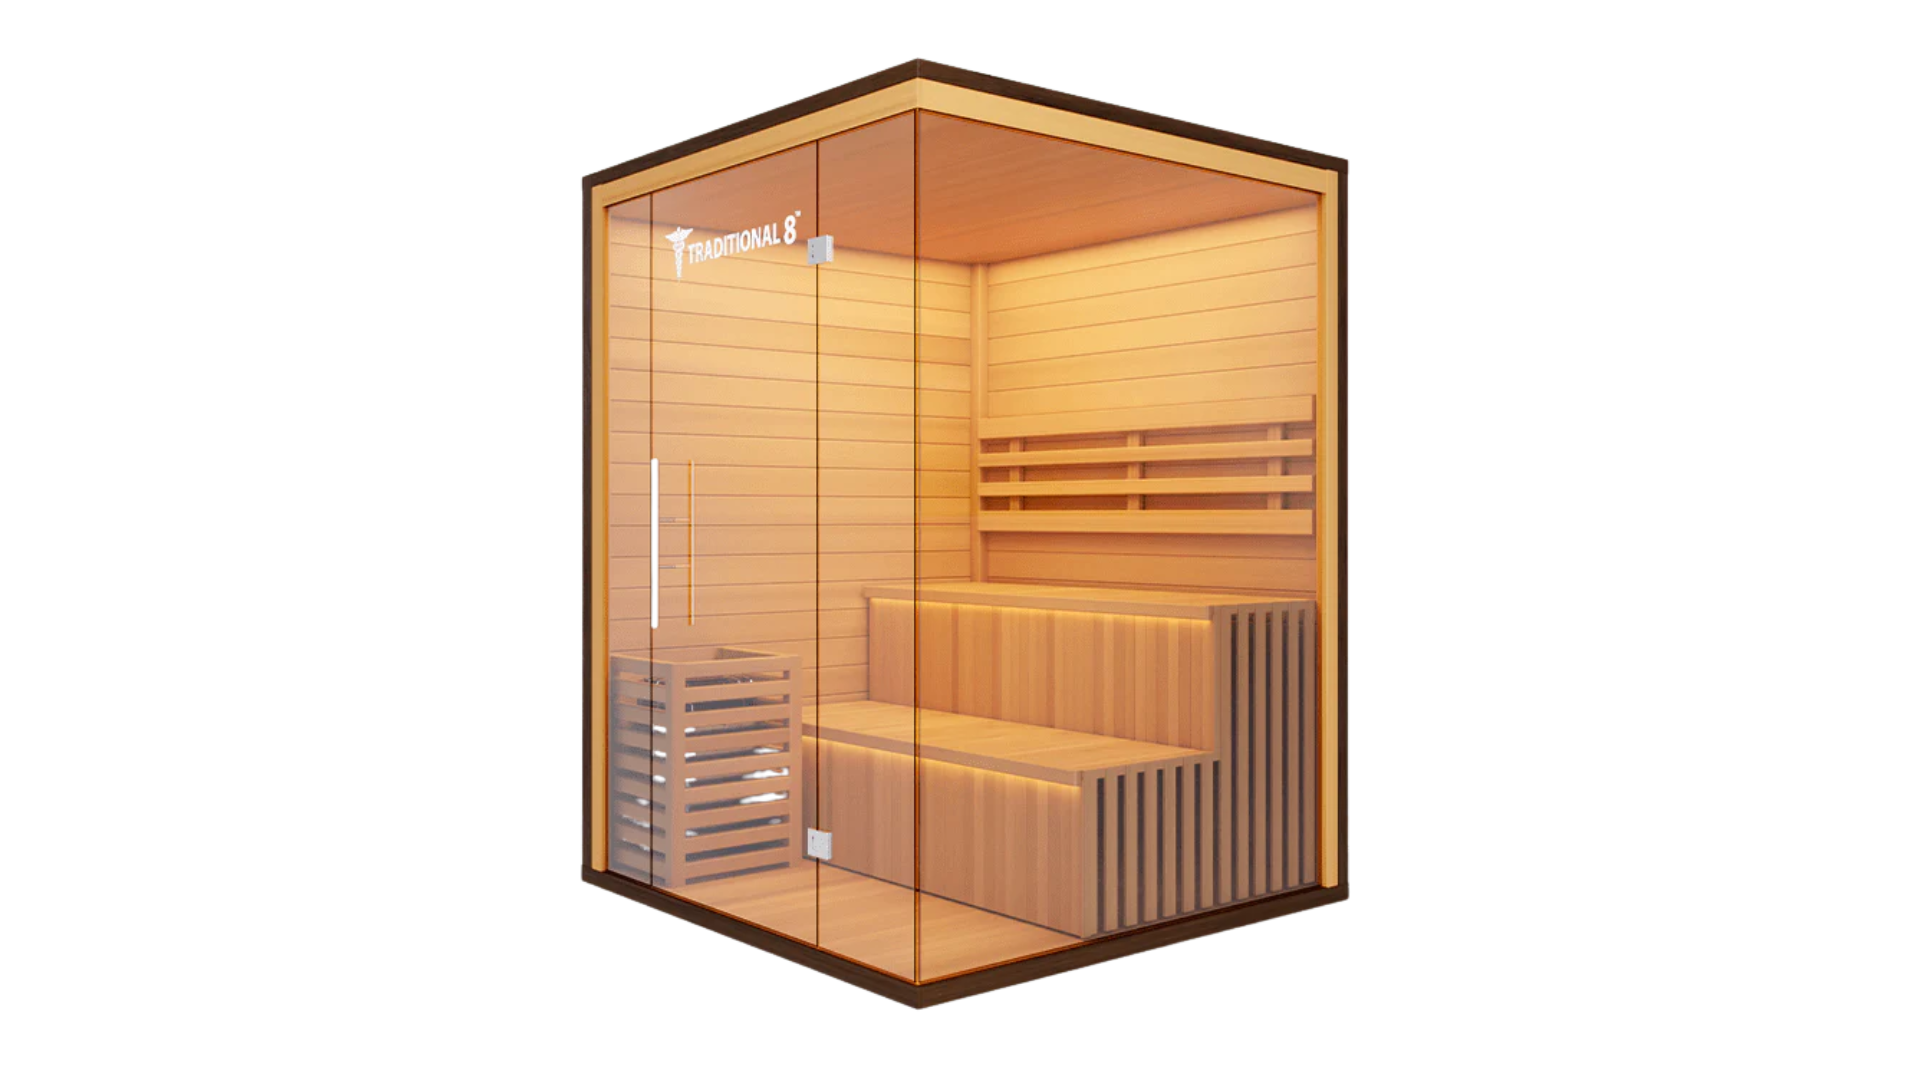 Image of the Traditional 8 -Steam Traditional Sauna sauna.